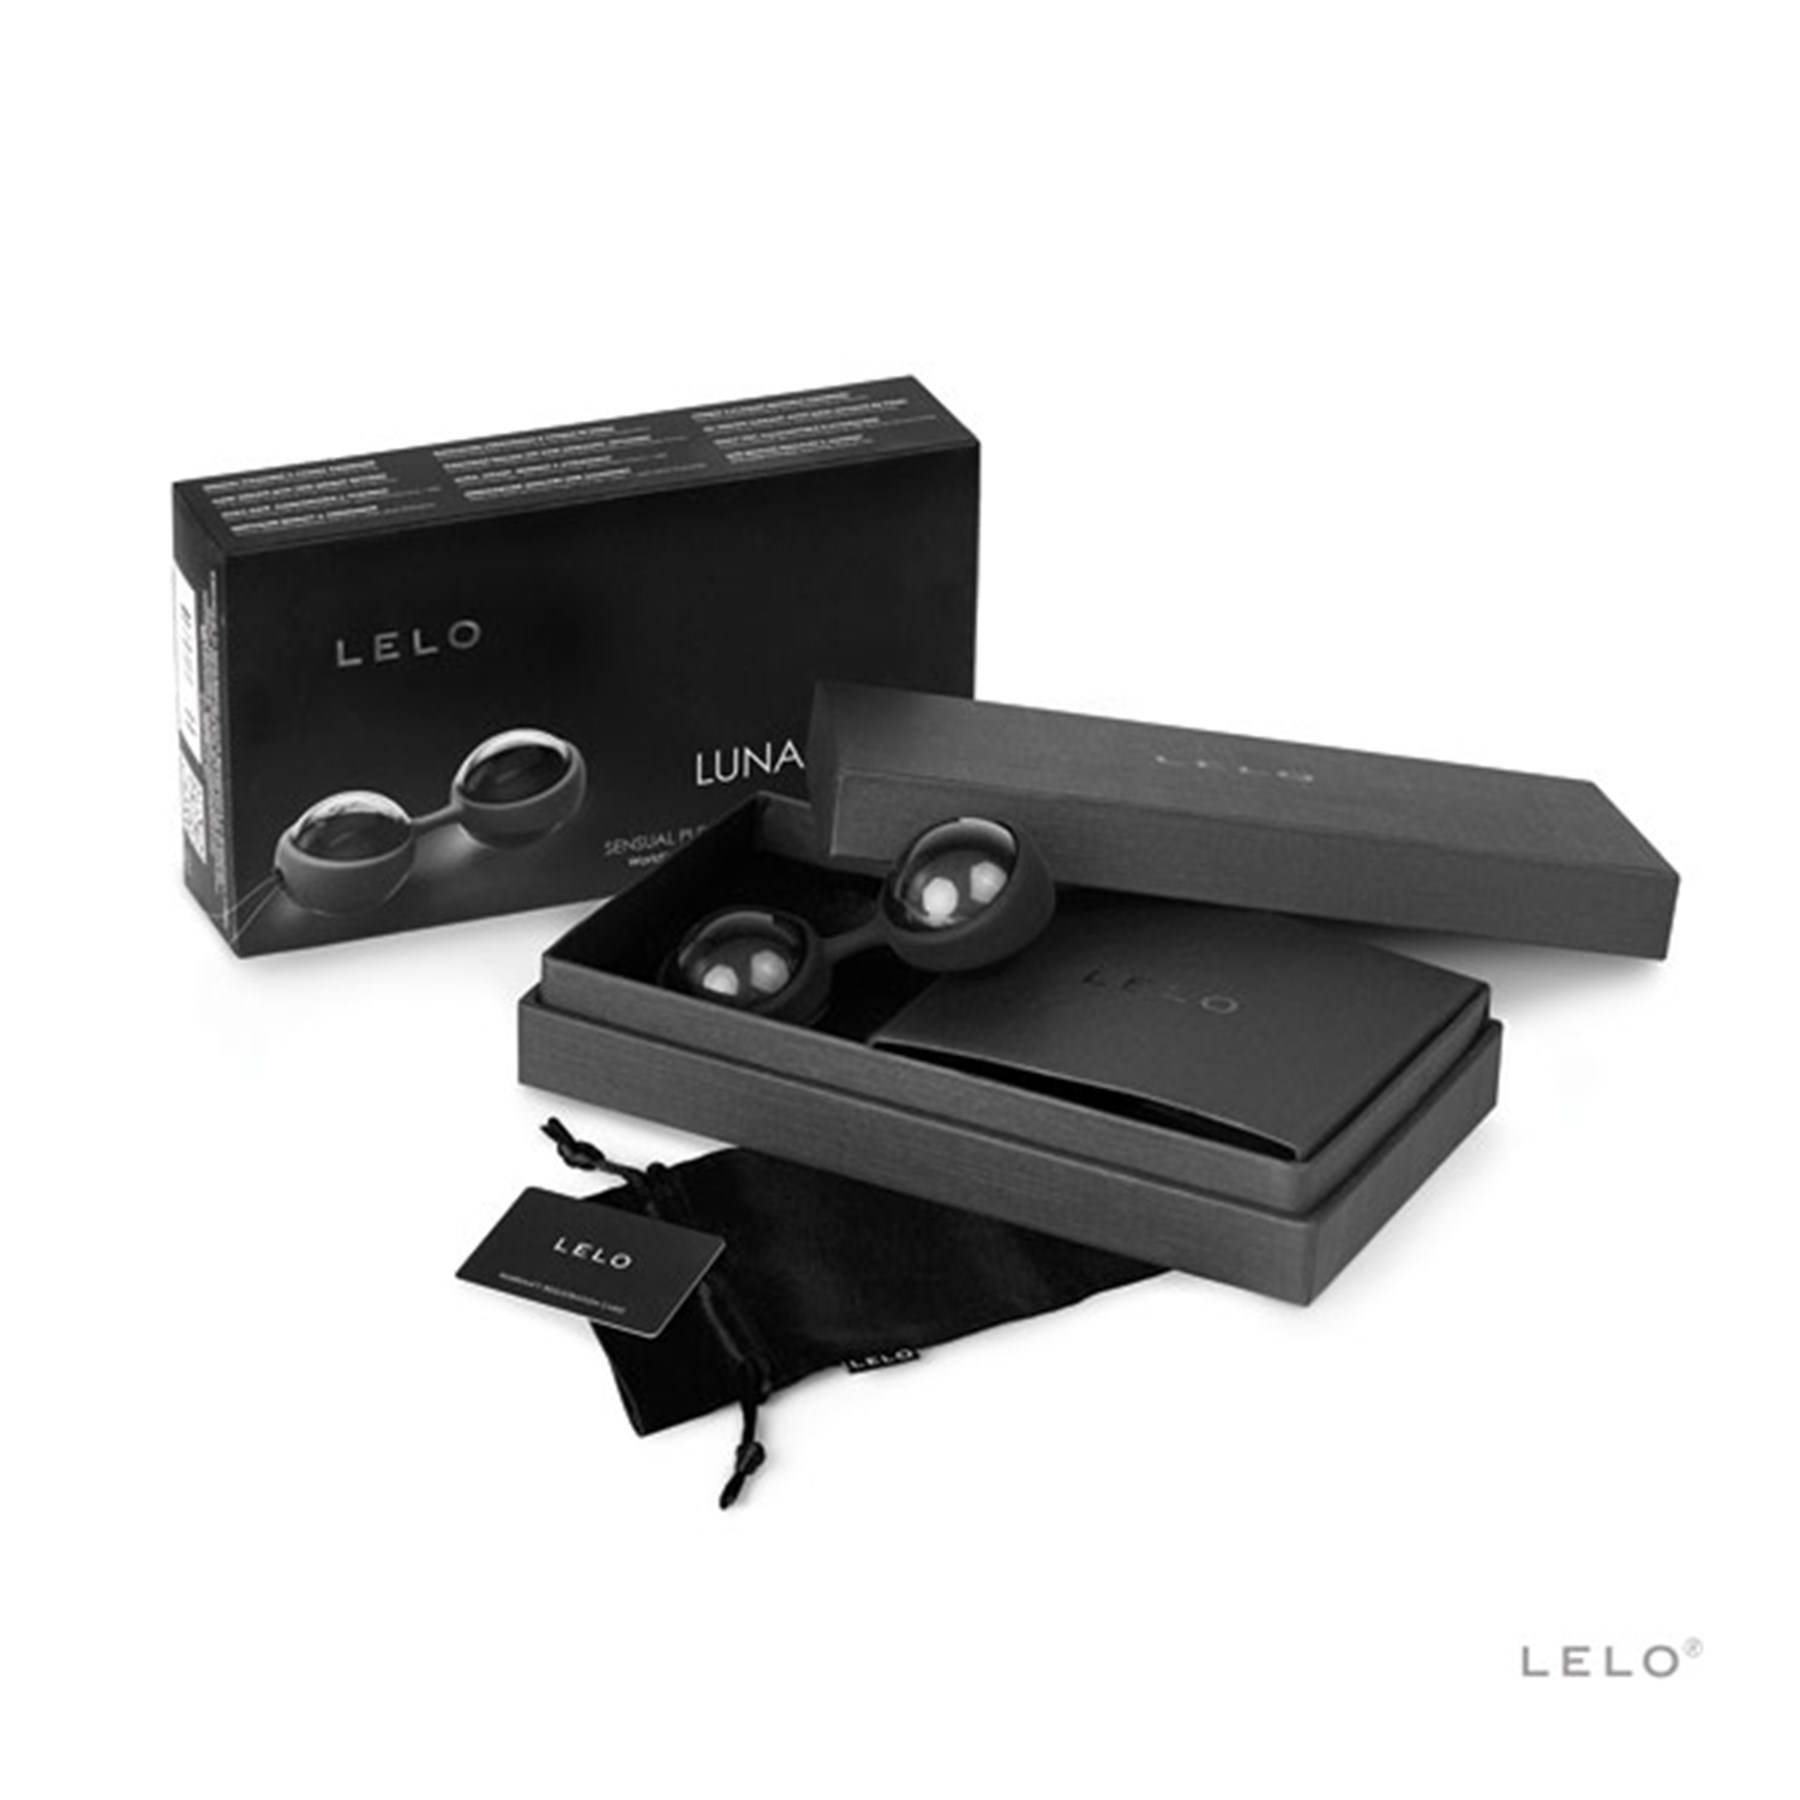 Lelo The Alibi Gift Set